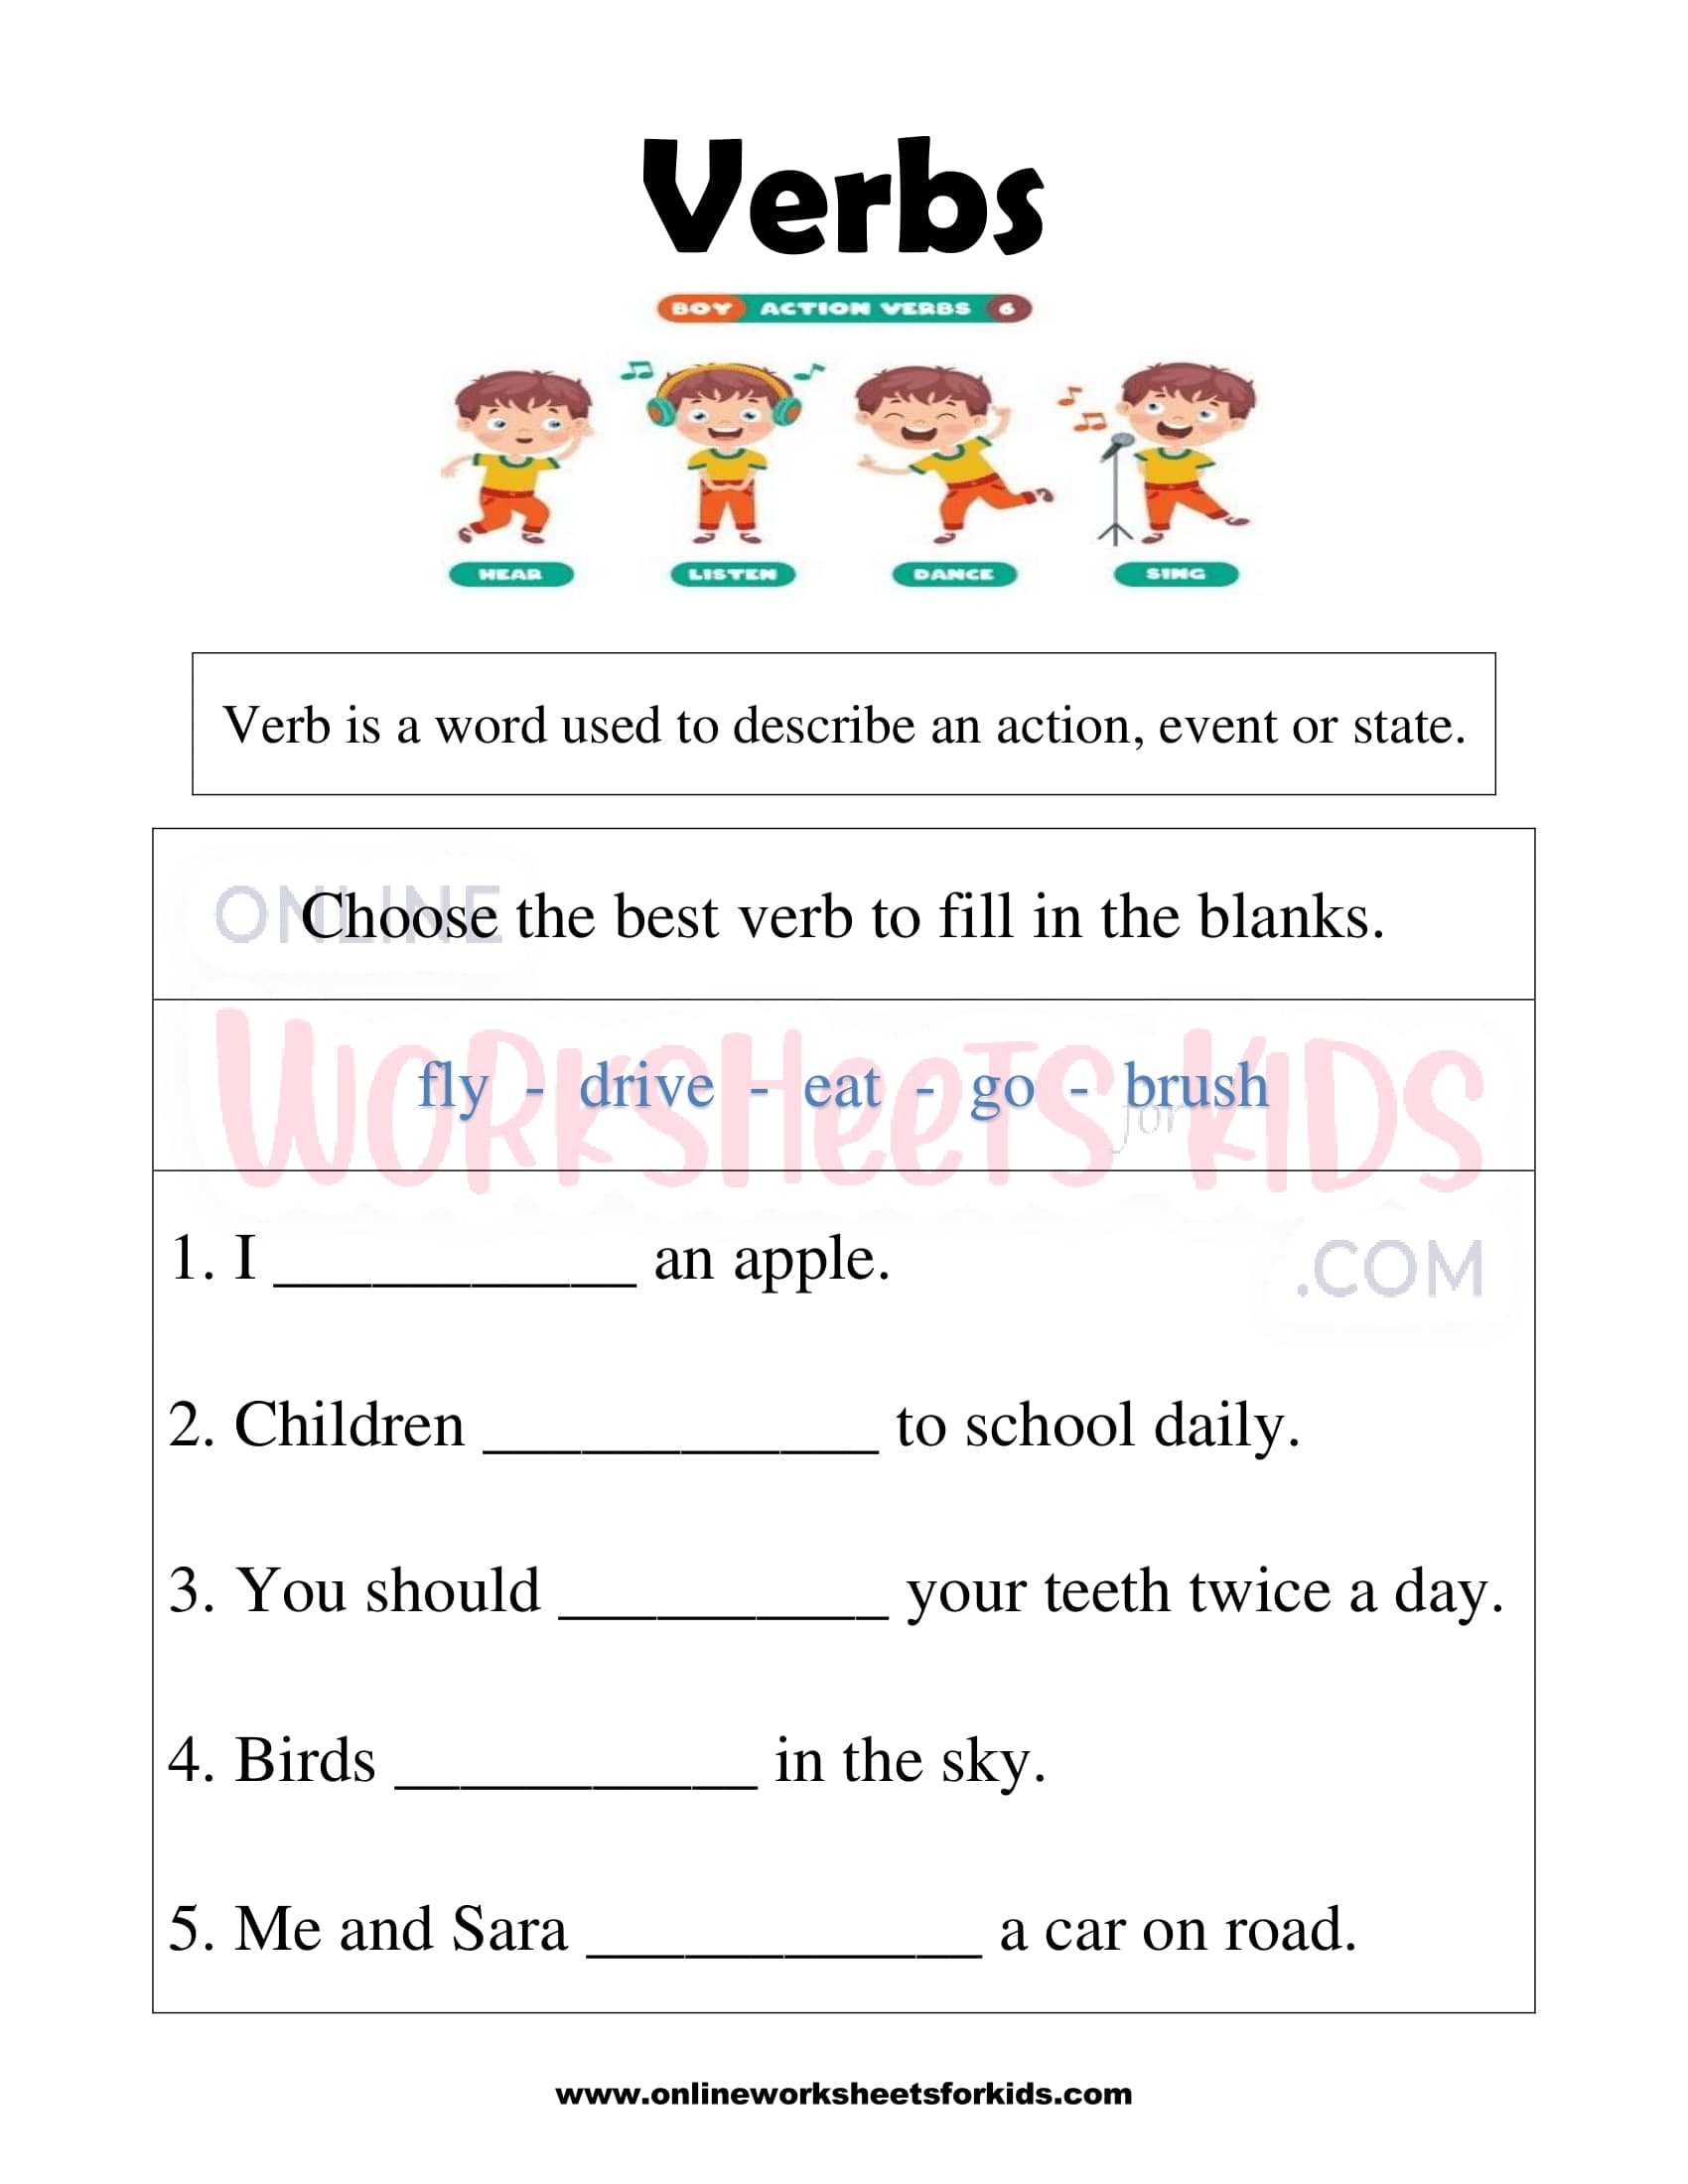 verbs-worksheets-for-grade-1-5